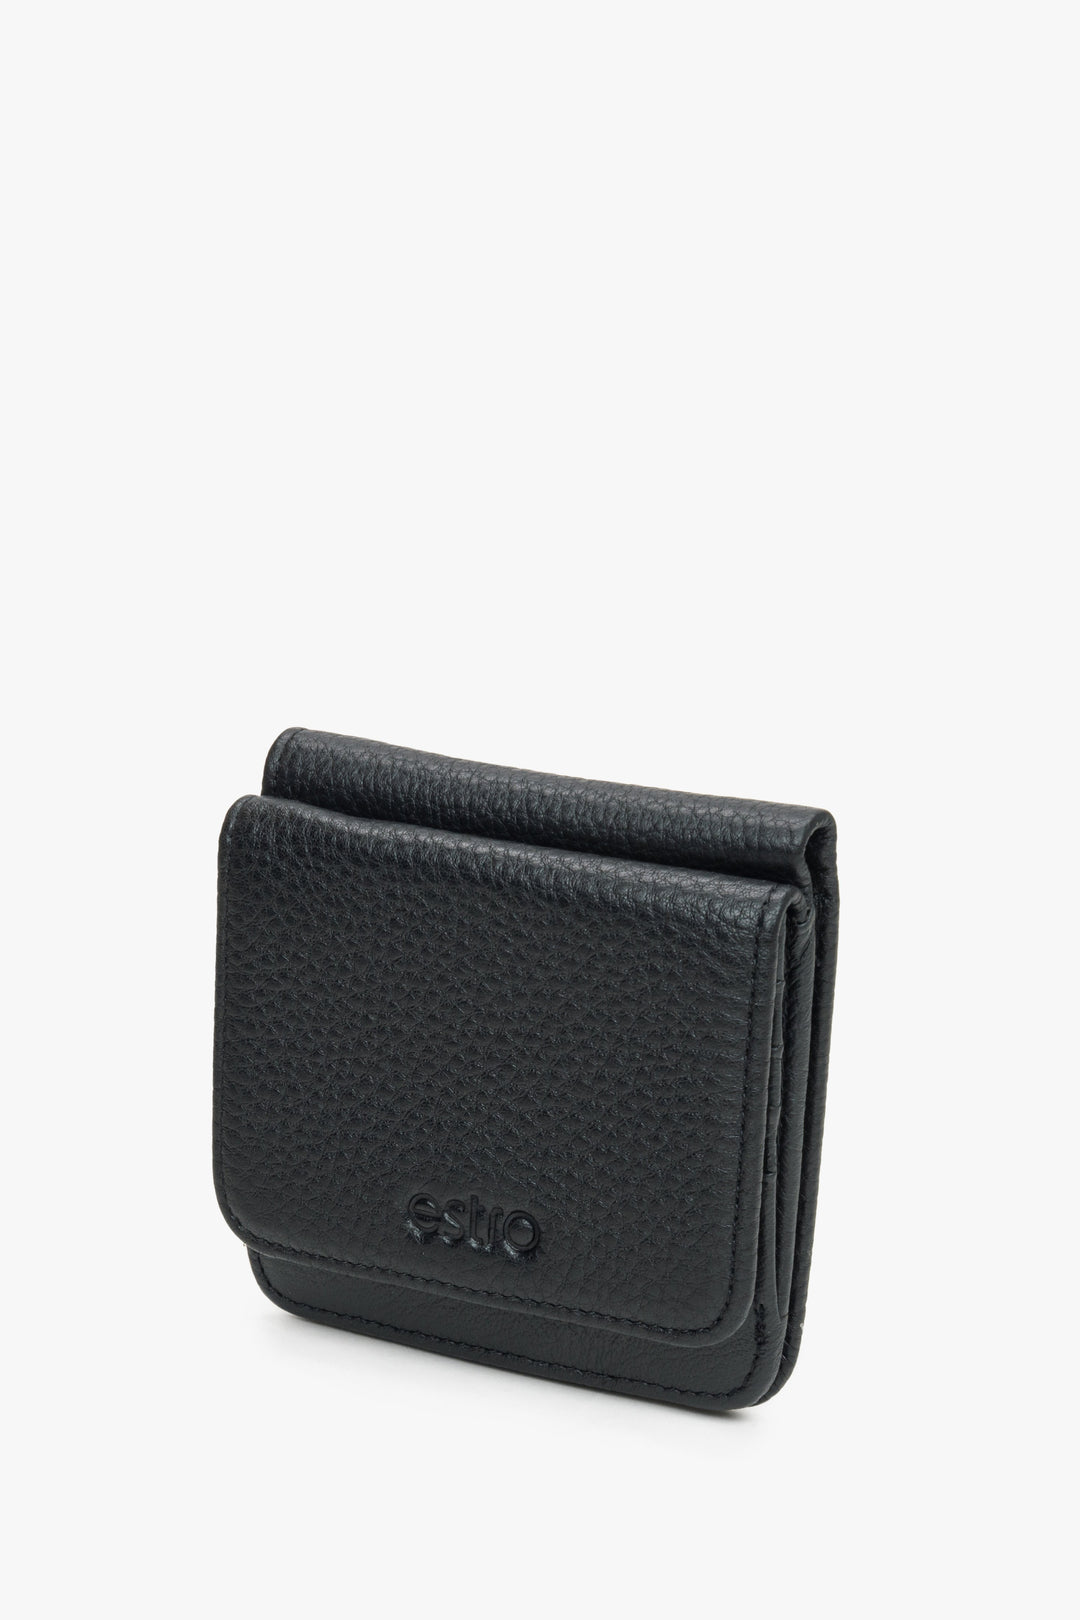 Estro men's black billfold wallet made of genuine leather.